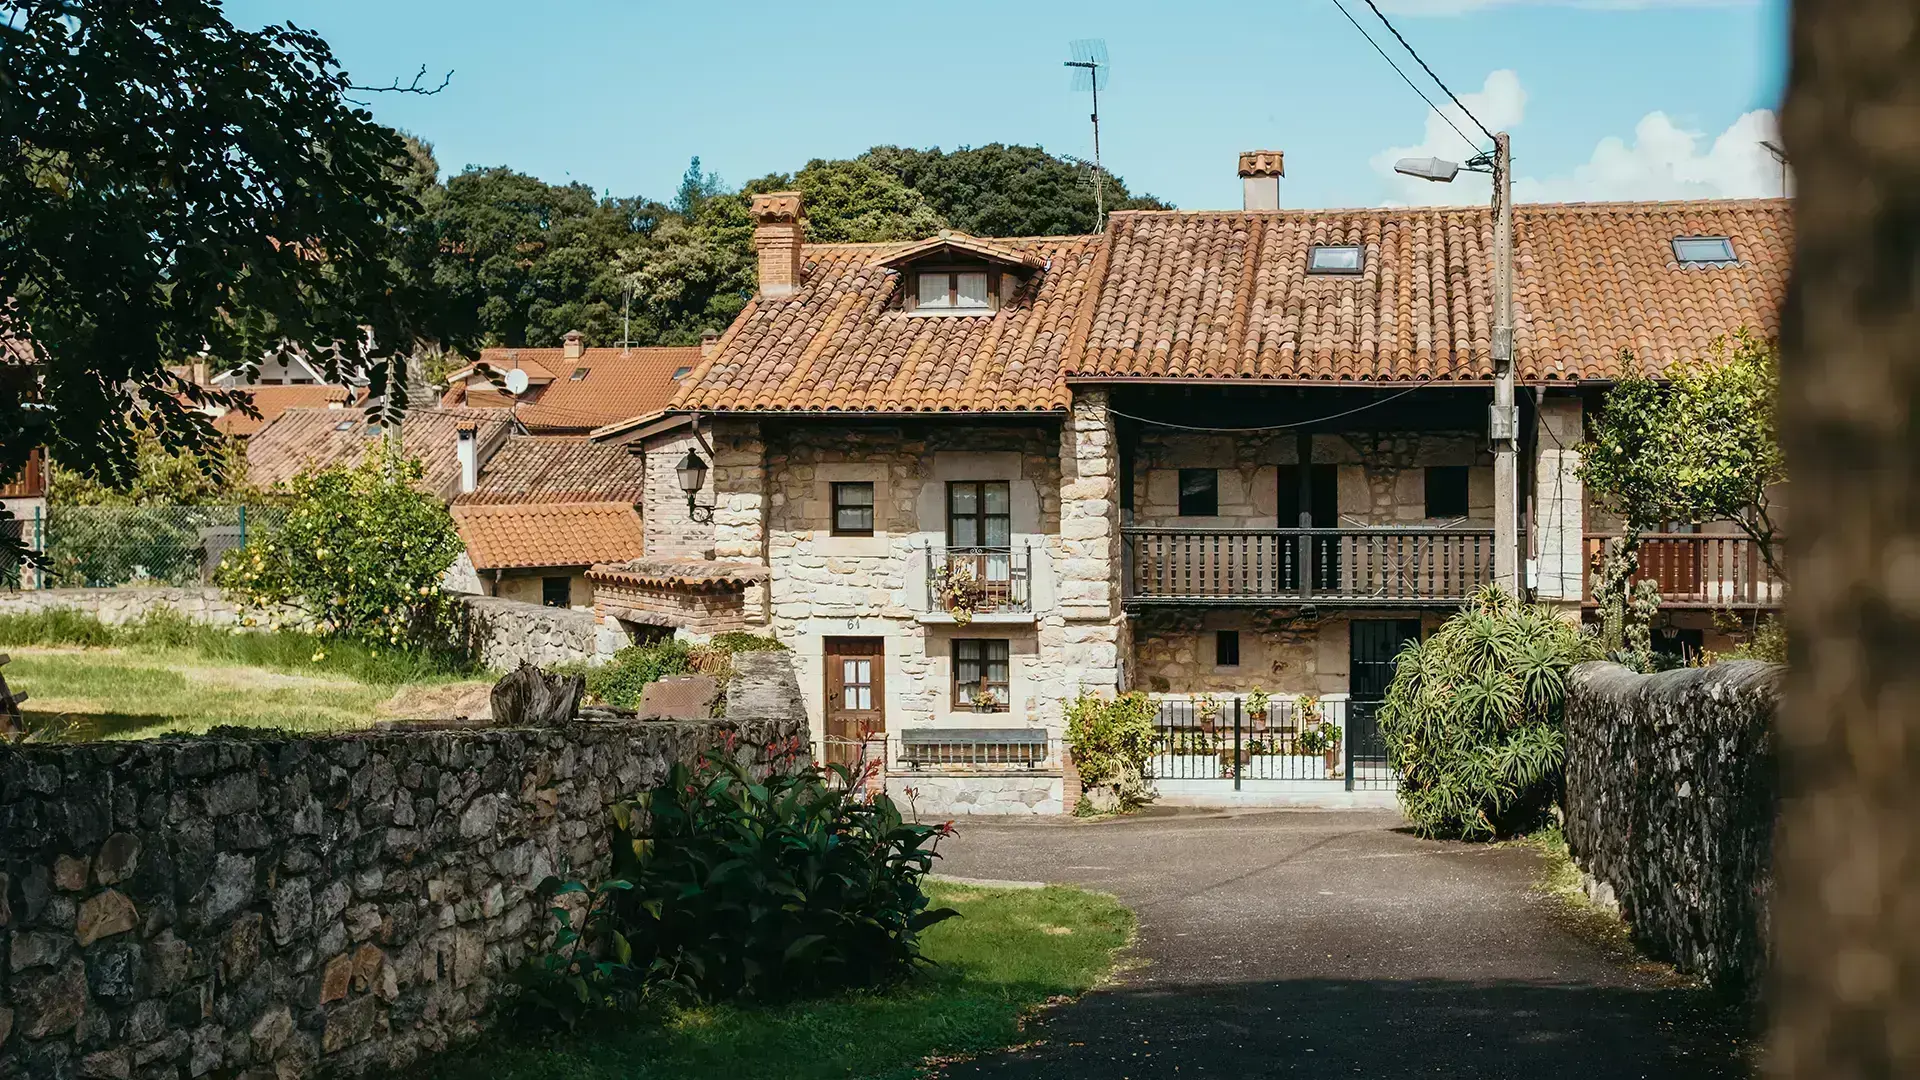 Habitations en pierres typiques du village de Pechón en Espagne